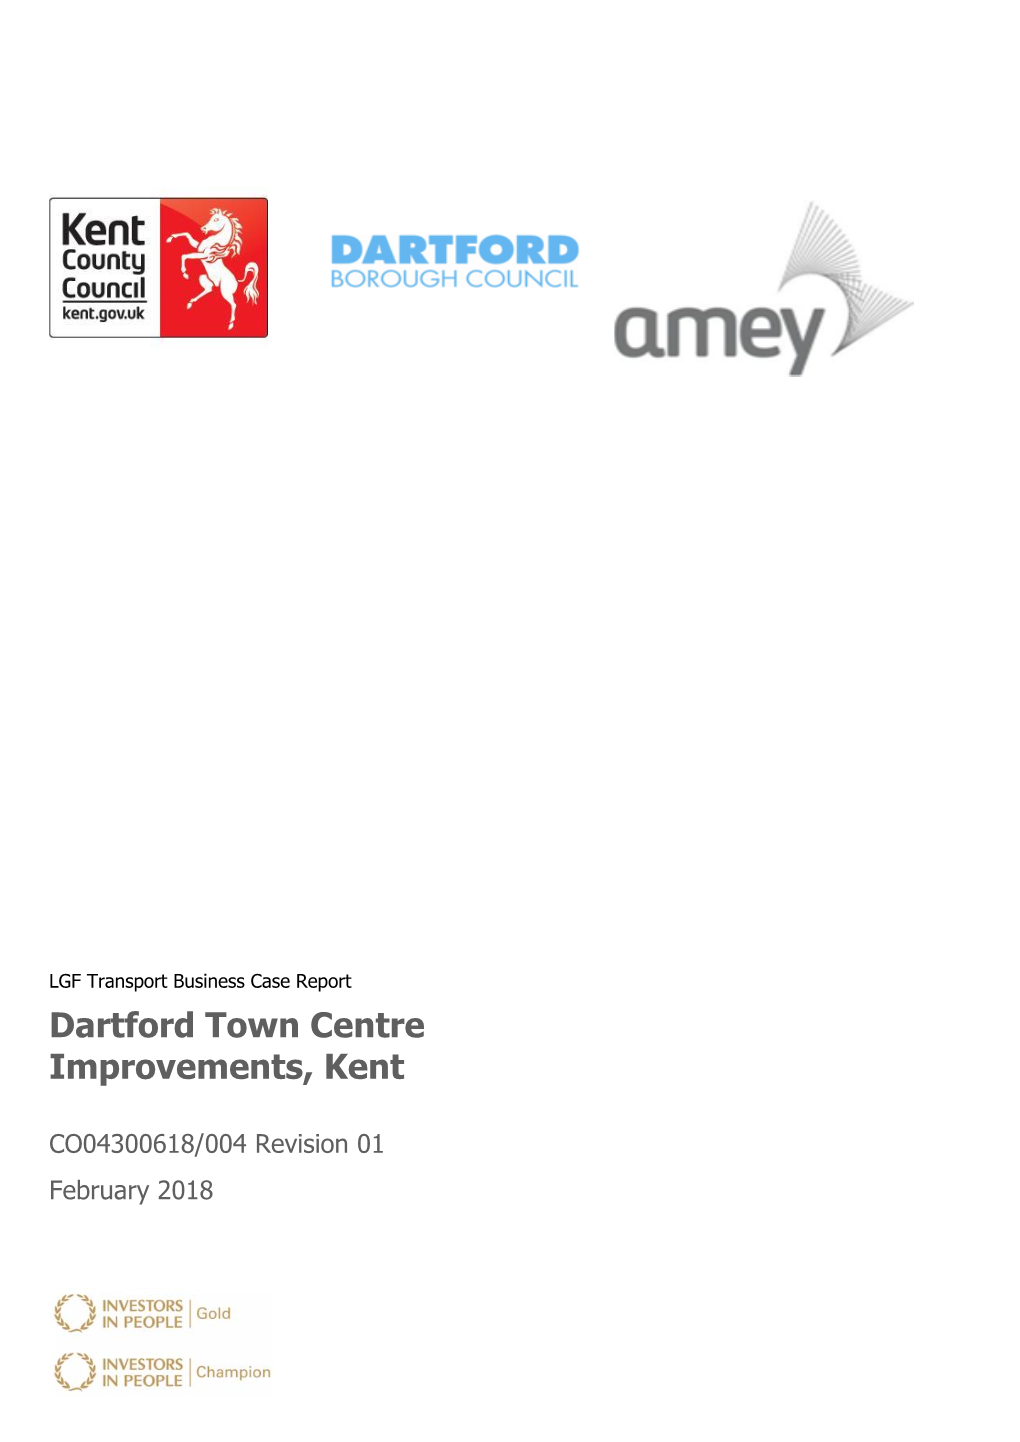 Dartford Town Centre Improvements, Kent